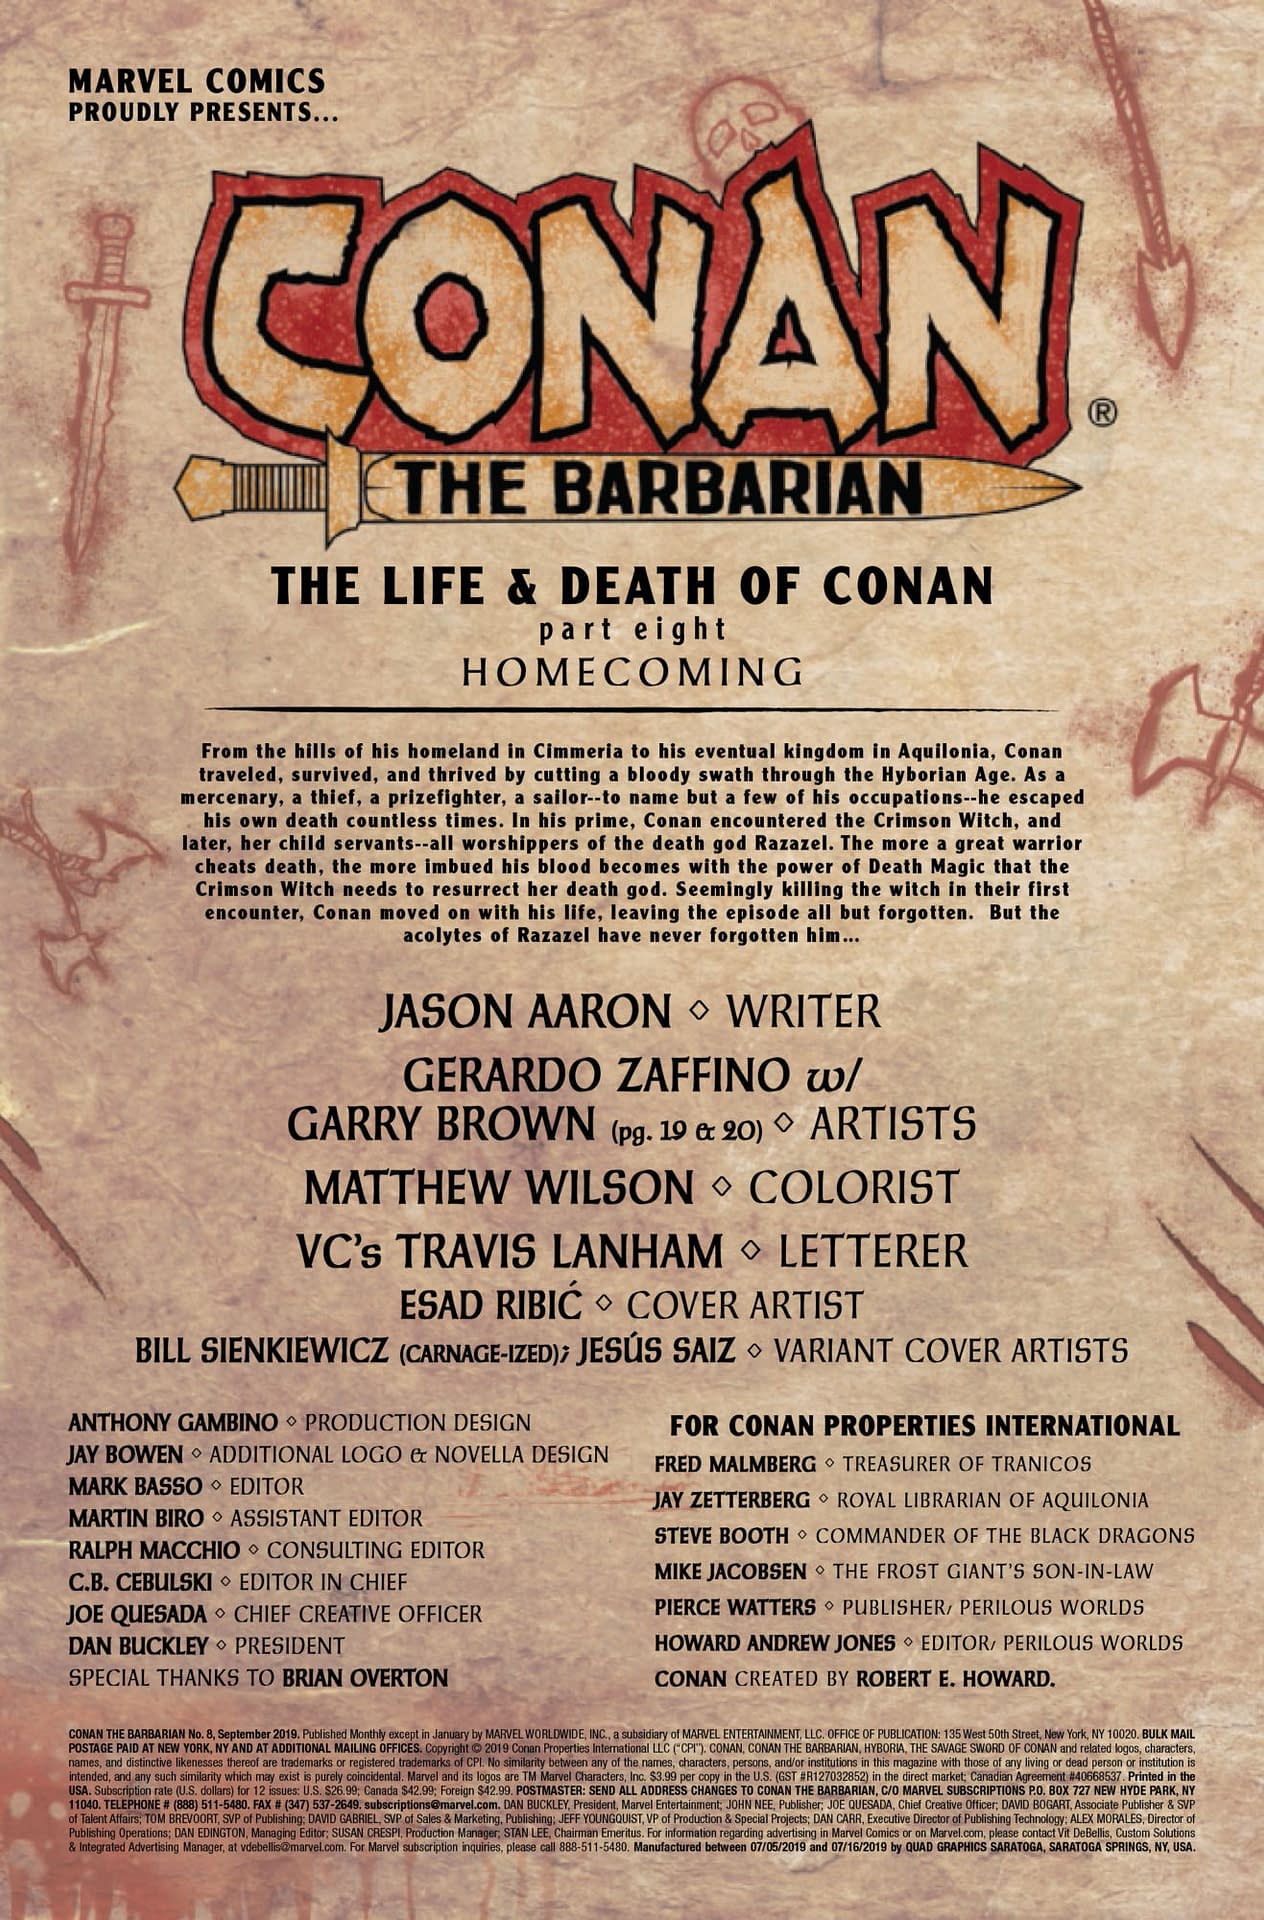 Cimmerian Anti-Vaxerism Run Rampant in Conan the Barbarian #8 [Preview]